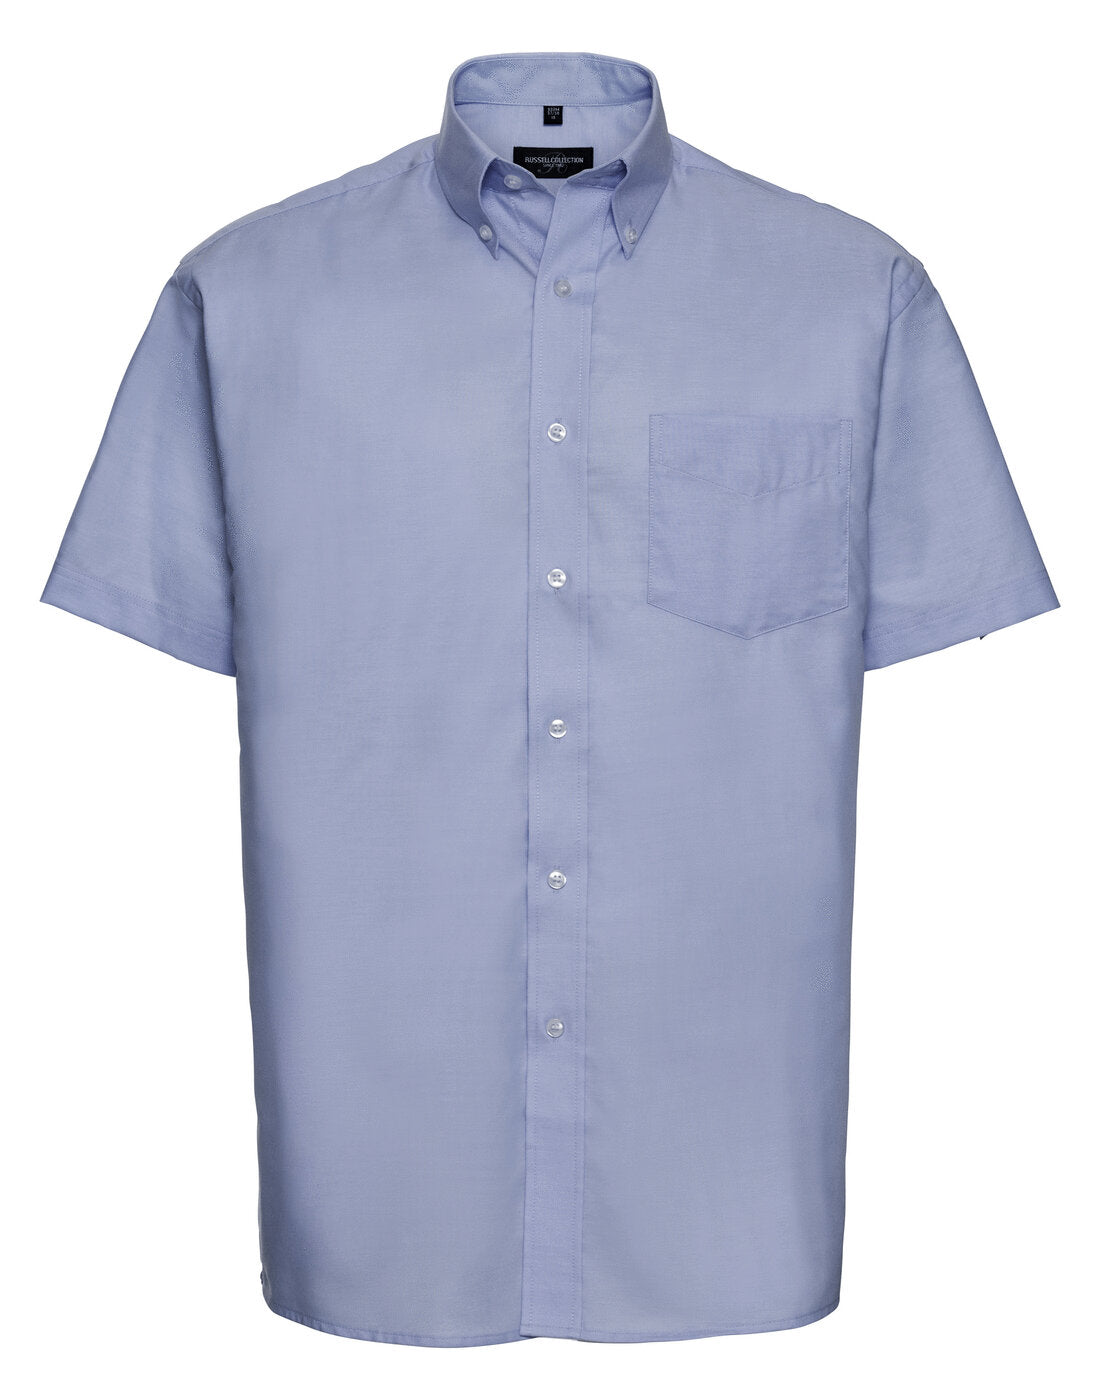 Russell Mens Short Sleeve Oxford Shirt Oxford Blue